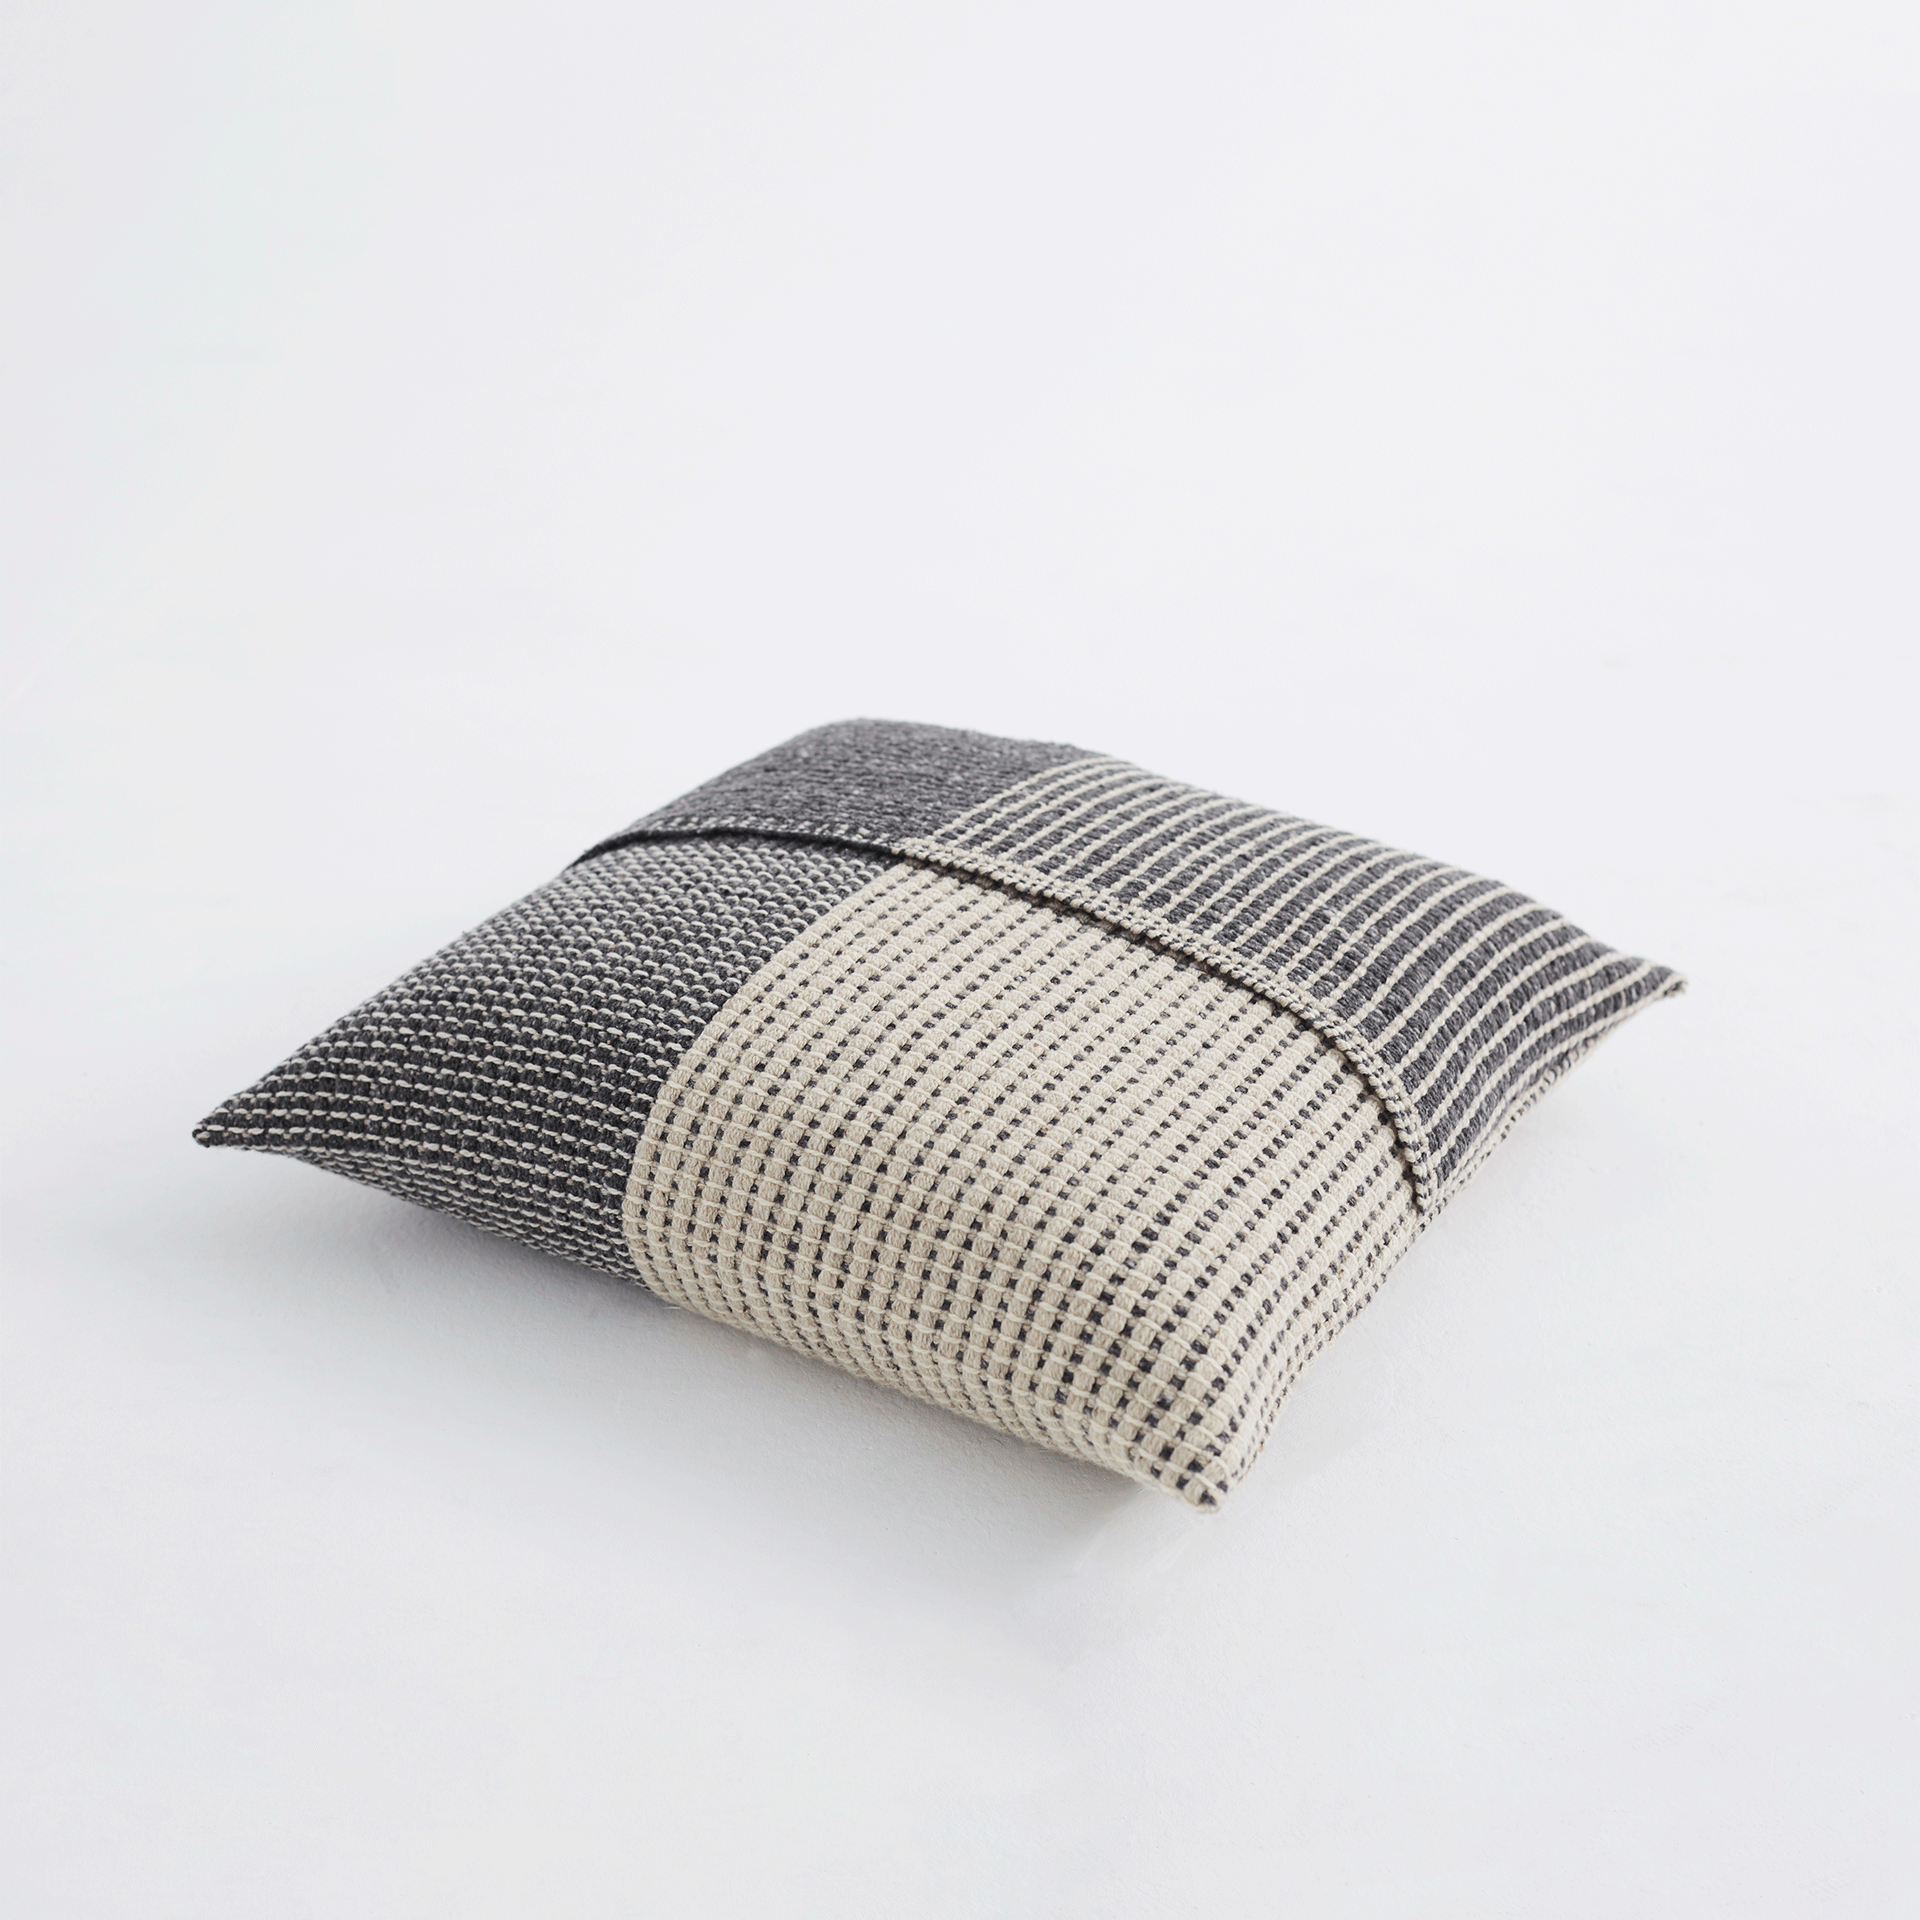 Cojin lana merina en tonos grises | Cushion merino wool cover in greyish colours